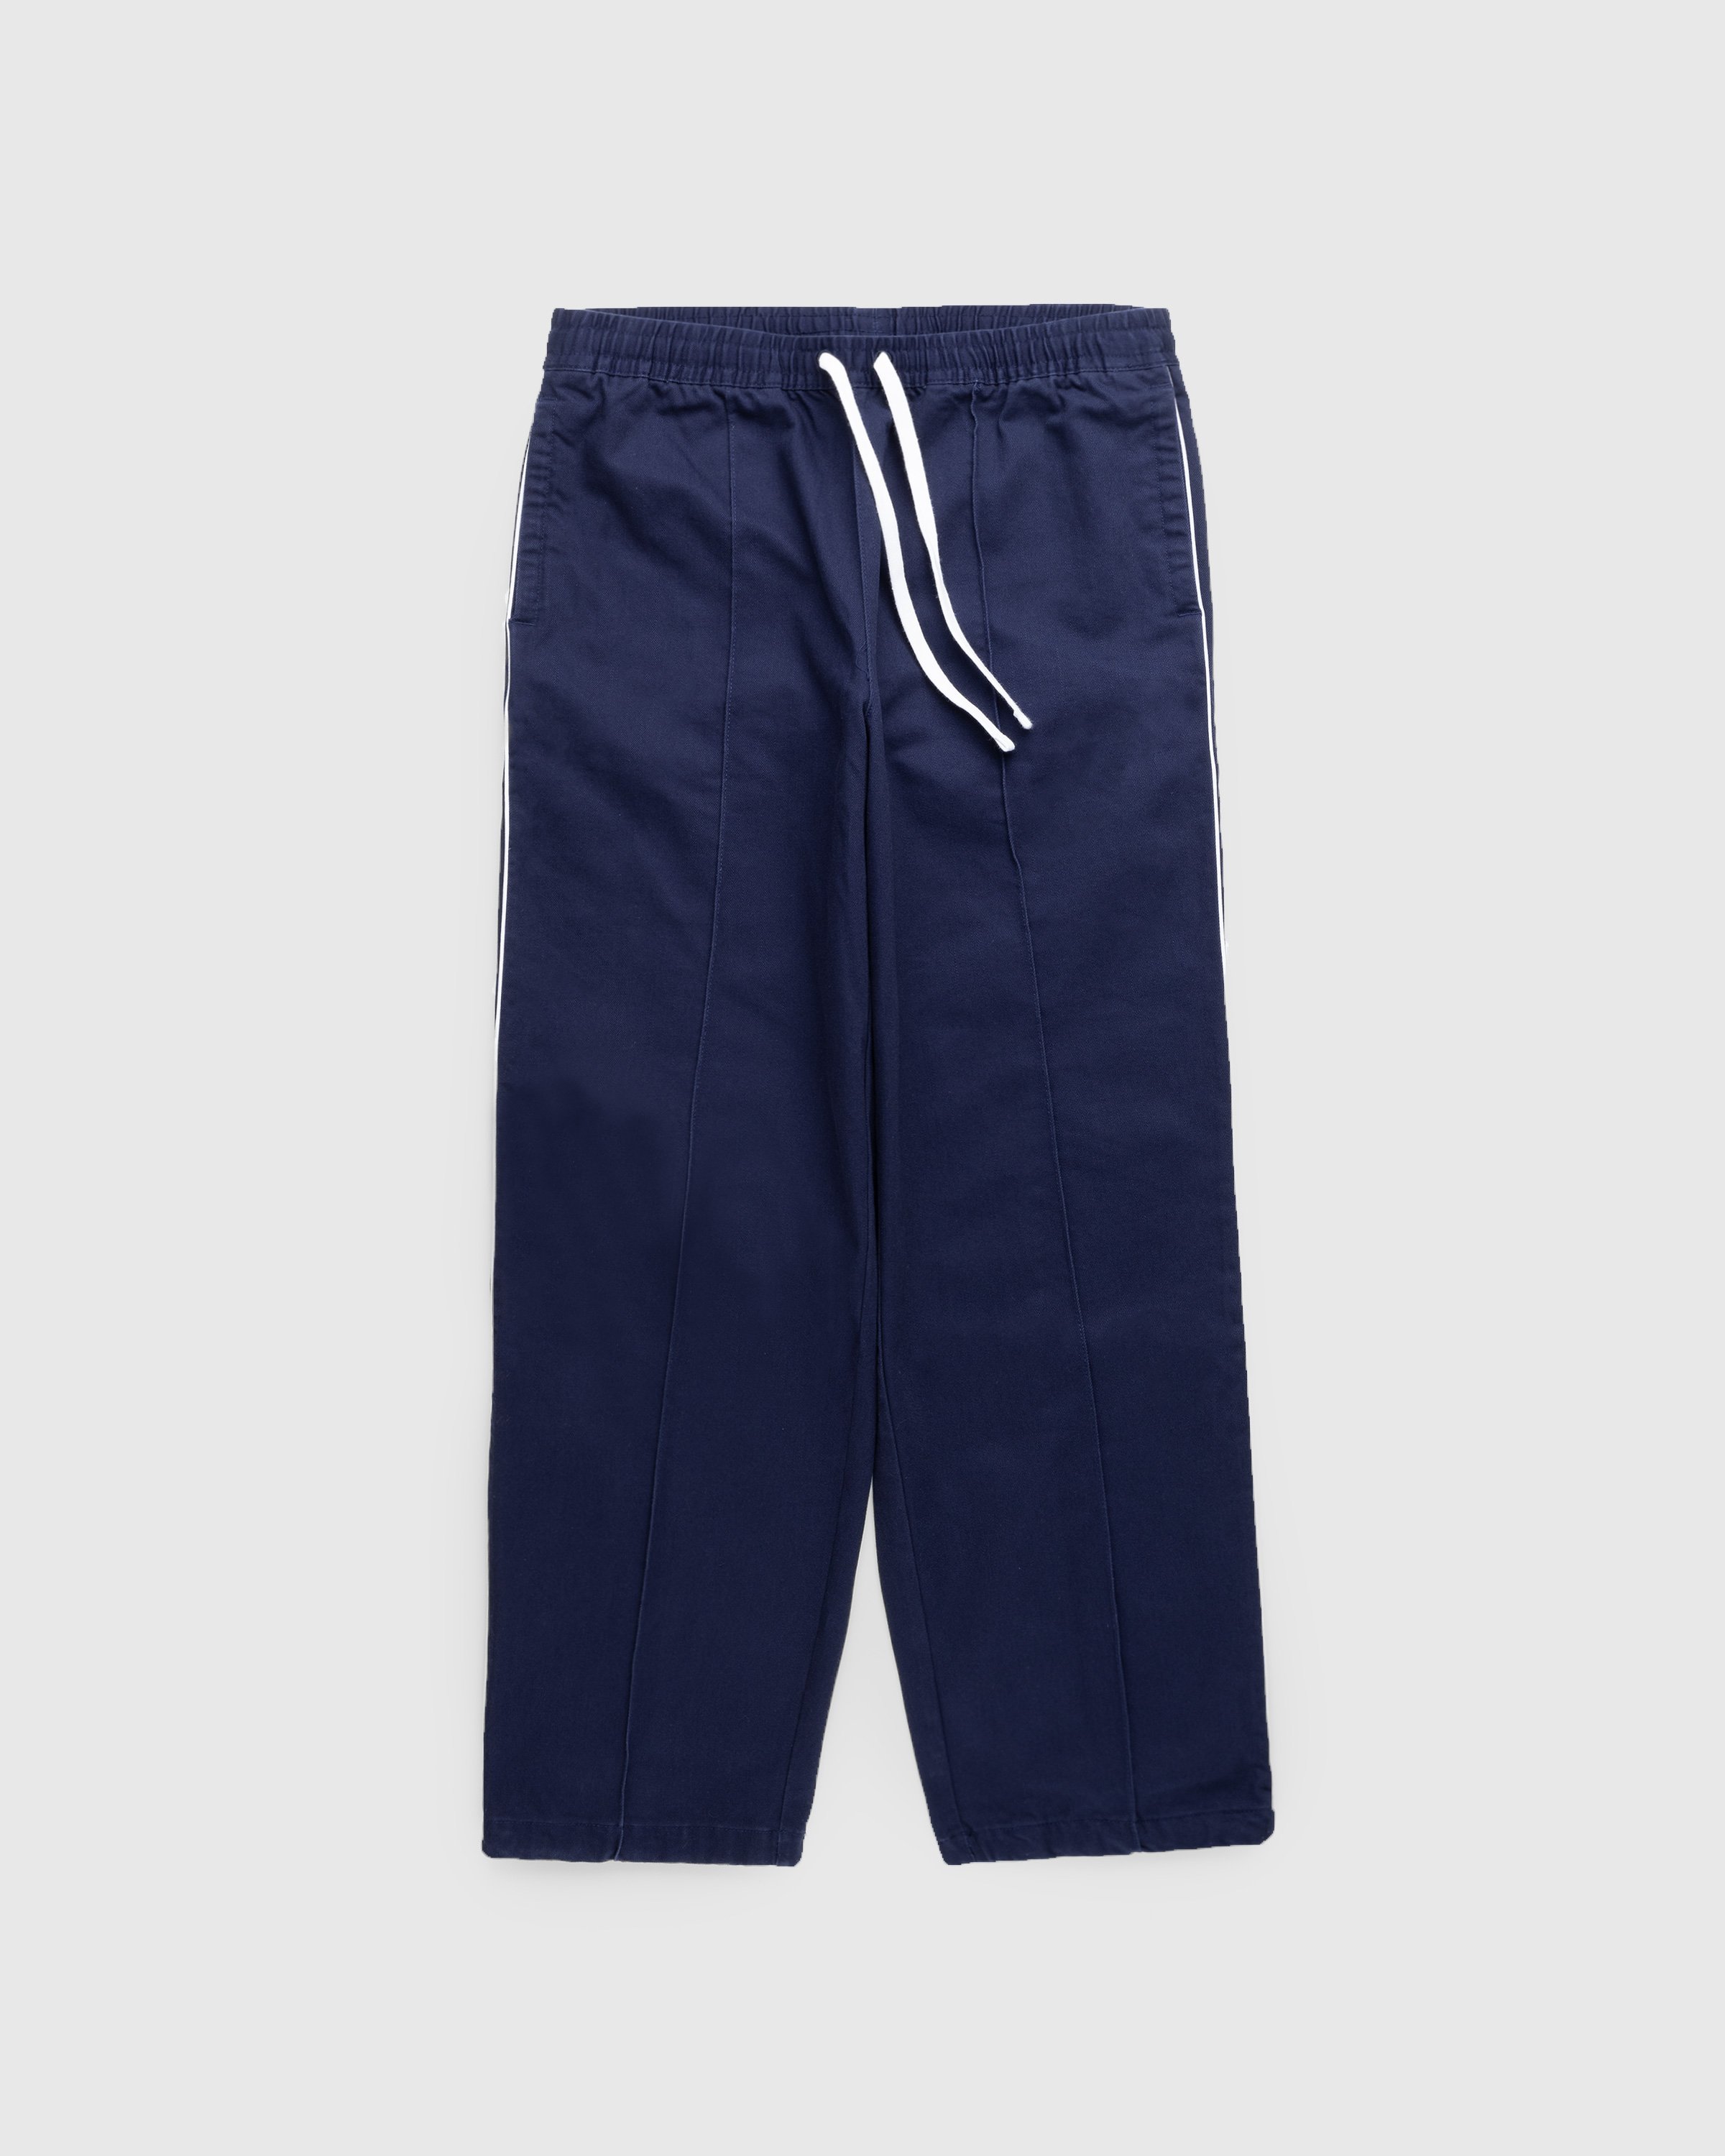 Puma x Noah - Pleated Twill Pants - Clothing - Blue - Image 1